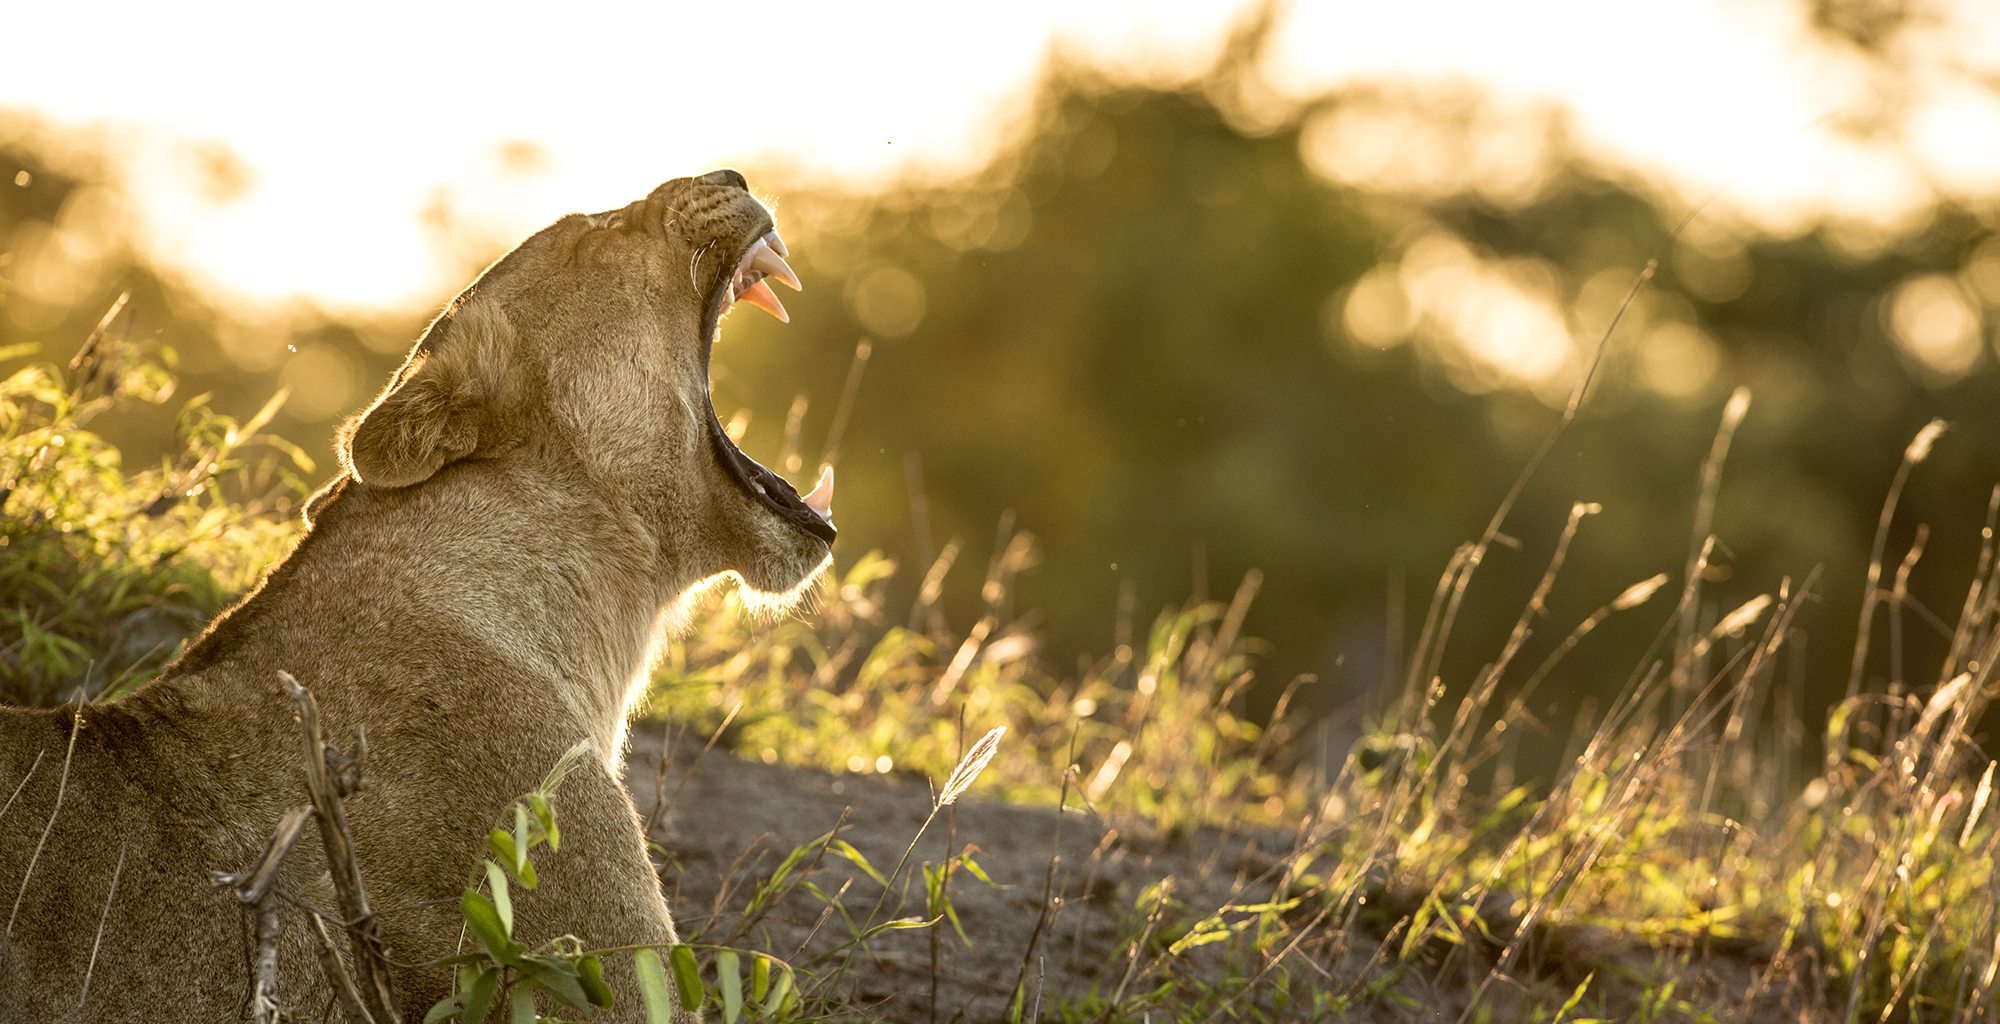 South-Africa-Singita-Sweni-Wildlife-Lion